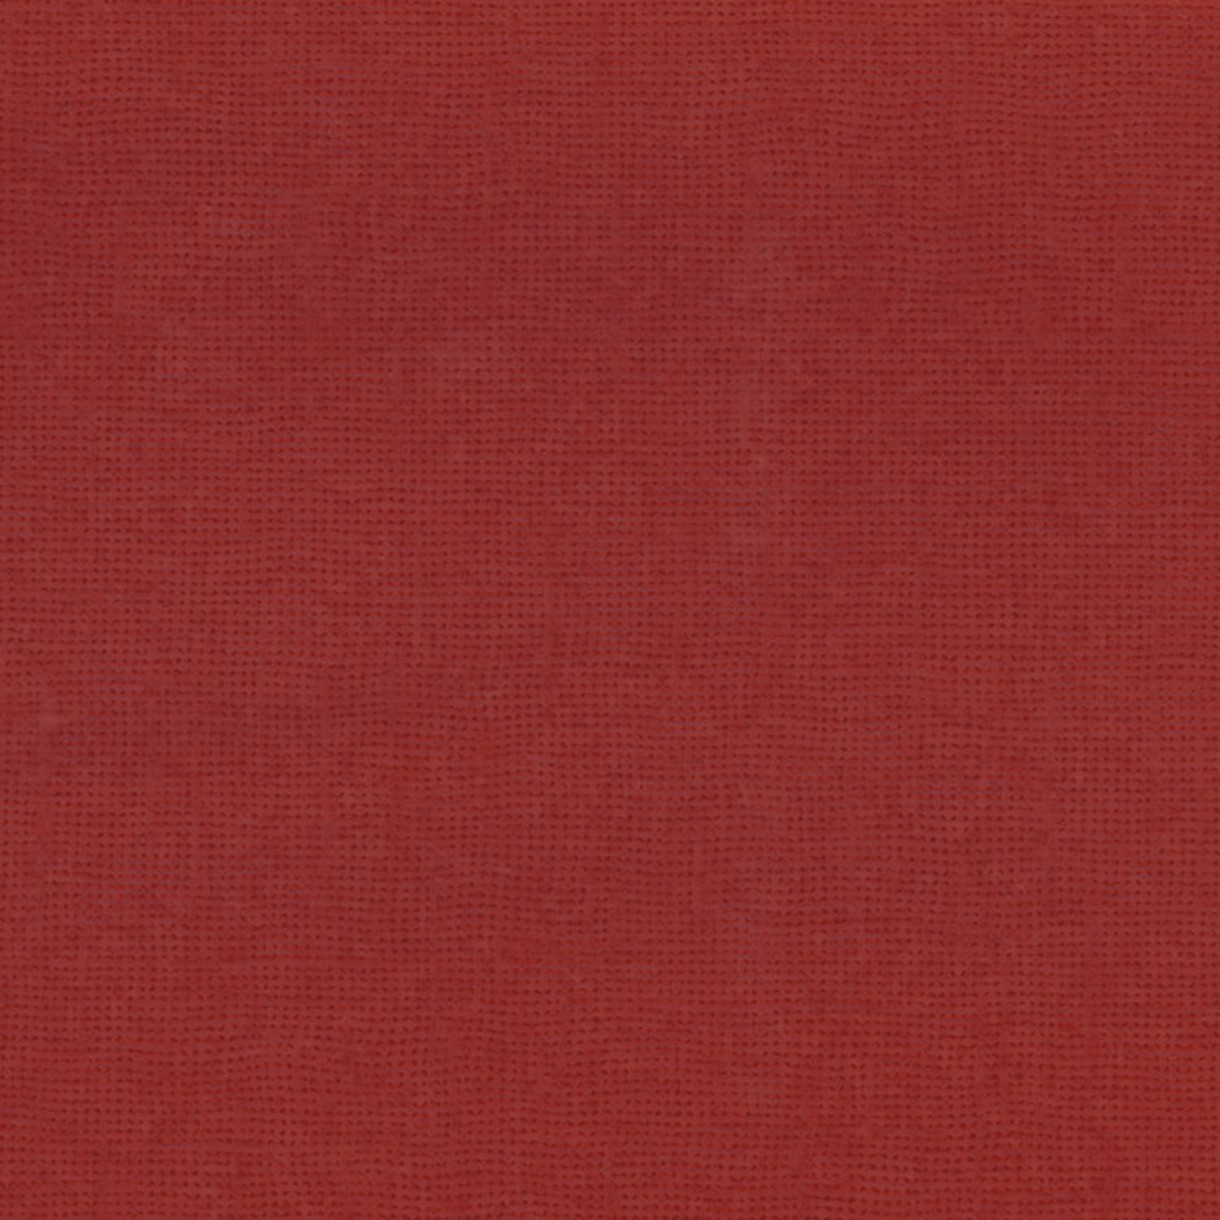 Салфетки для сервировки стола Tork LinStyle Red (478854)